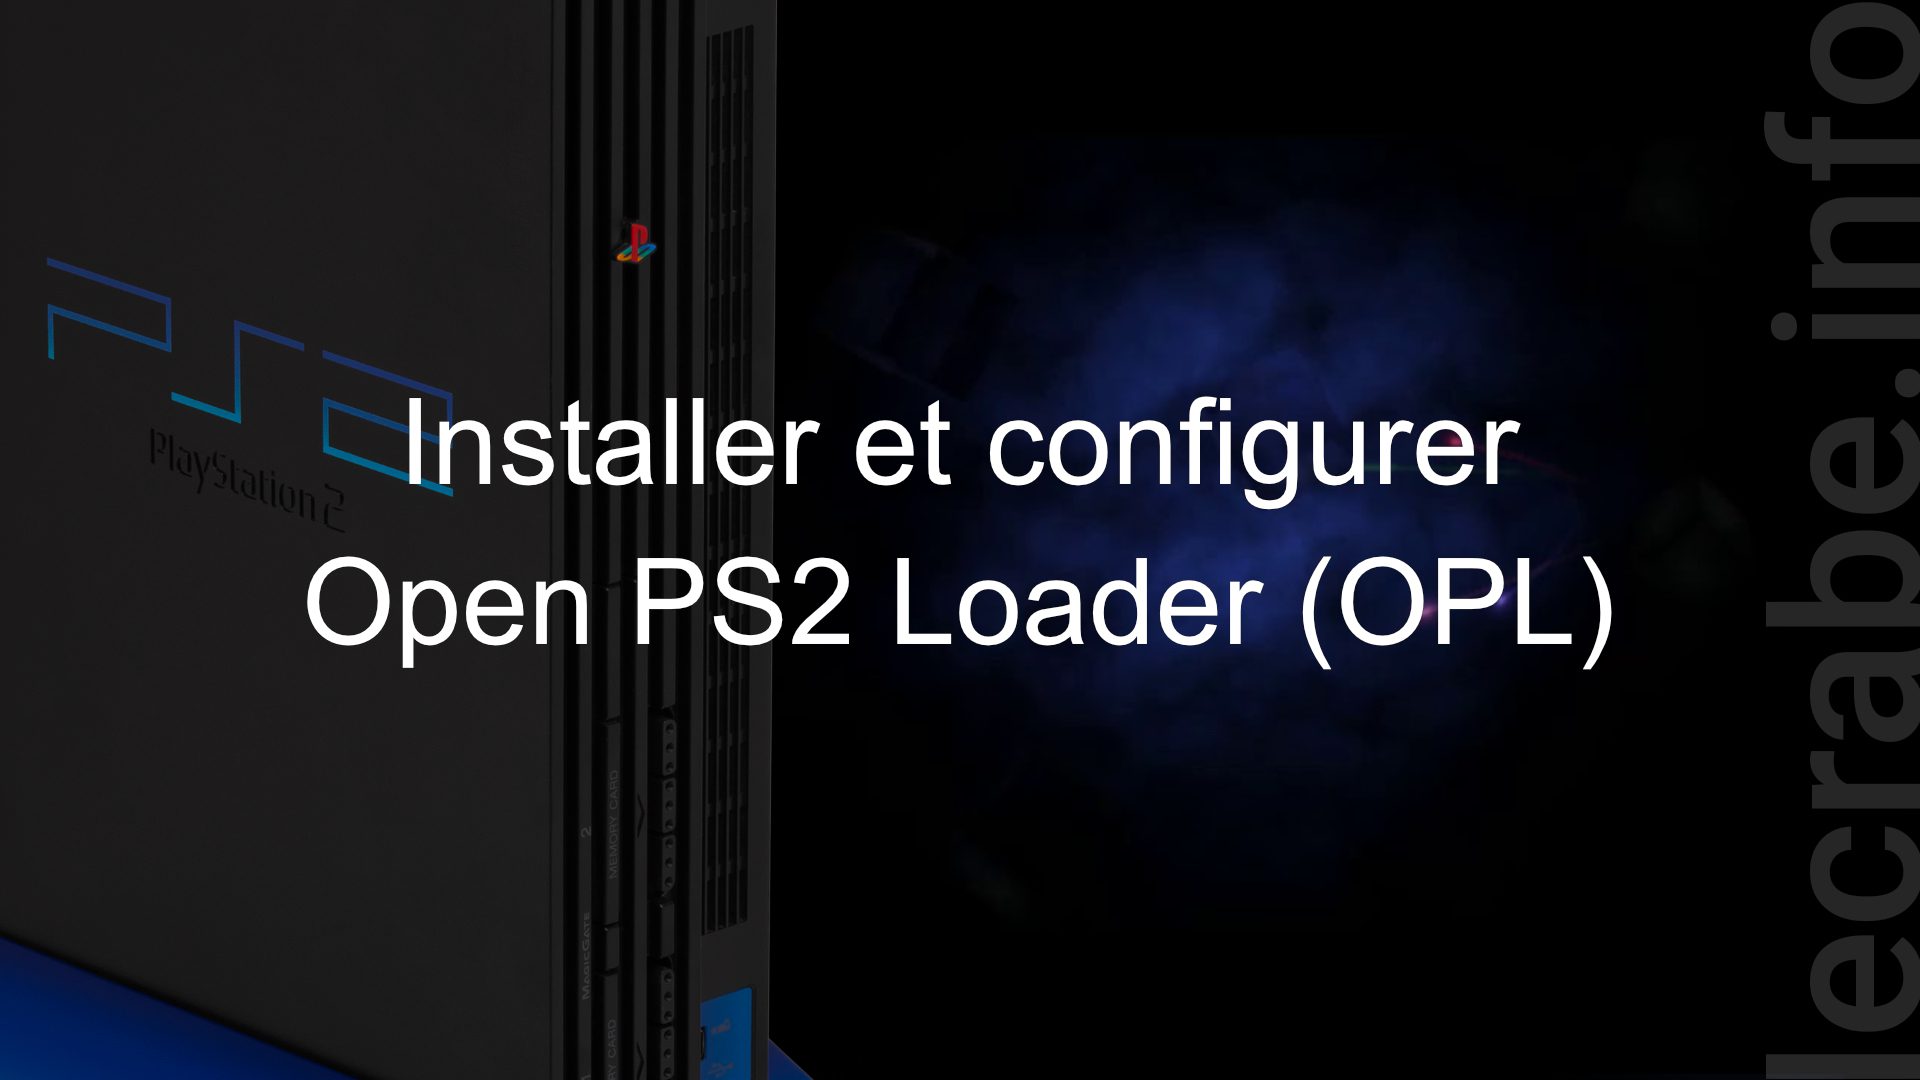 ps2-installer-et-configurer-open-ps2-loader-opl-5fd387fb97dcd.jpg